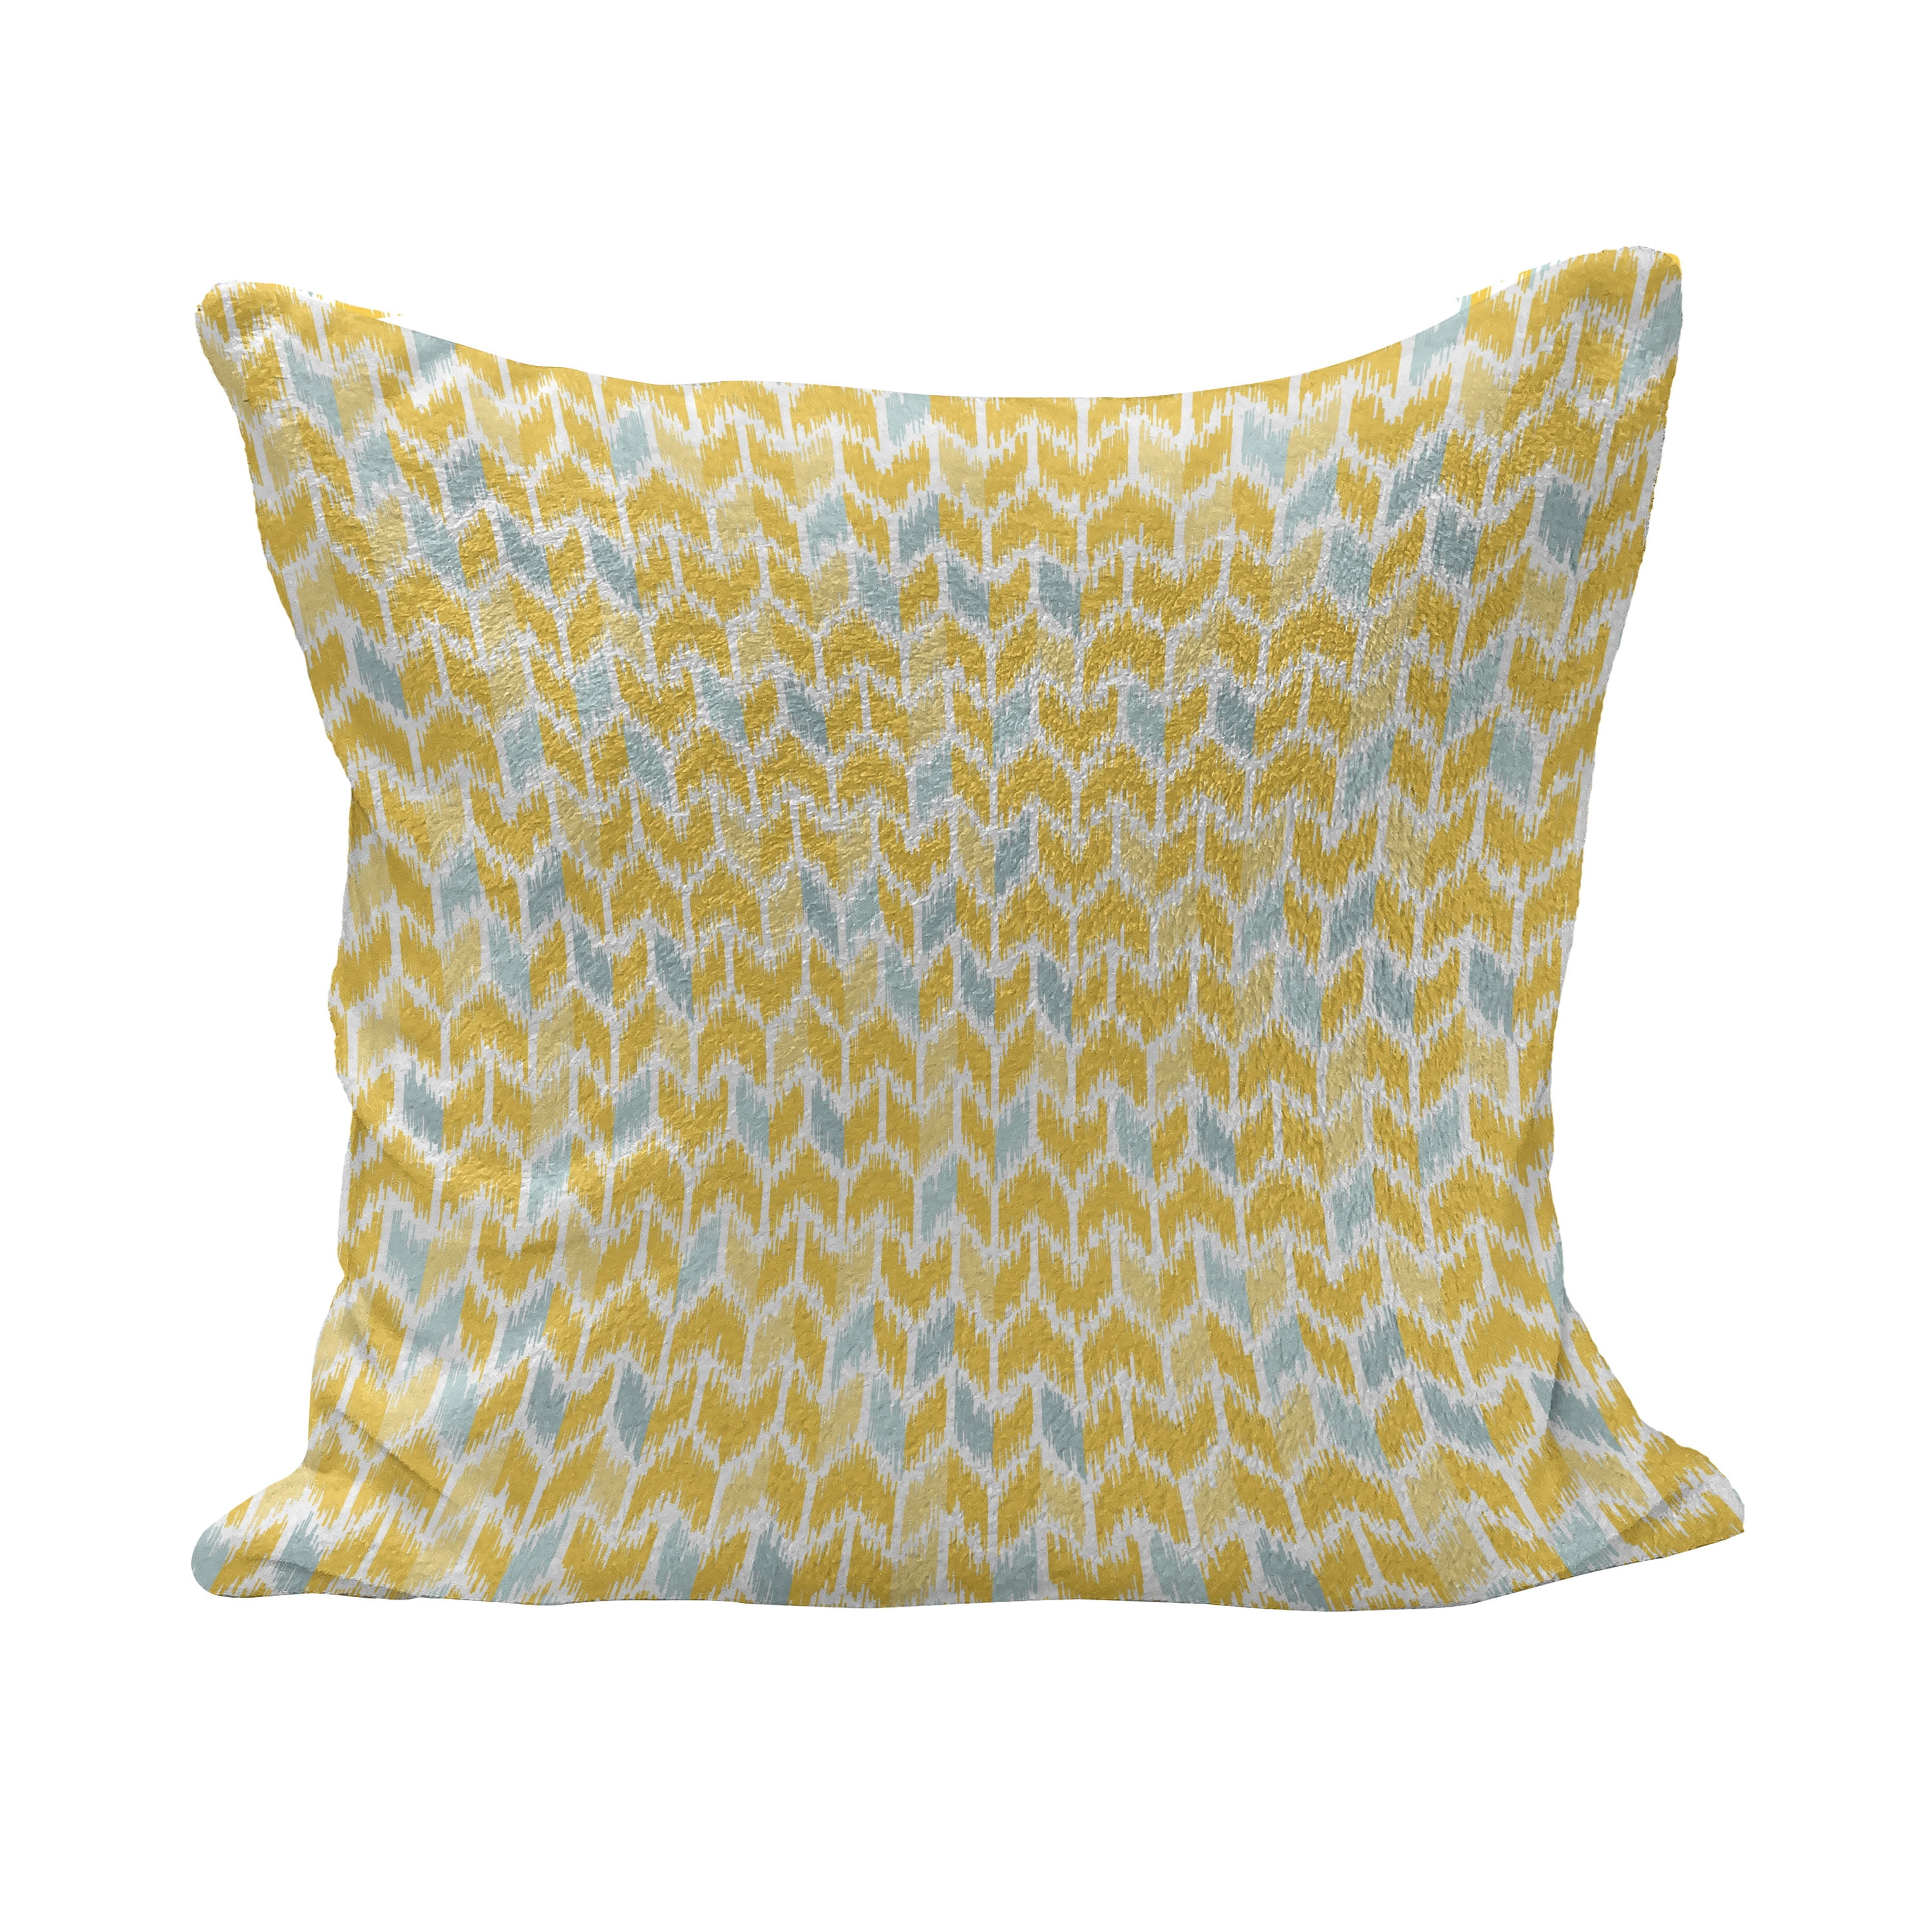 New 100% Cotton Printed Chevron Zigzag Design Cushion Covers 18x18'' Size 